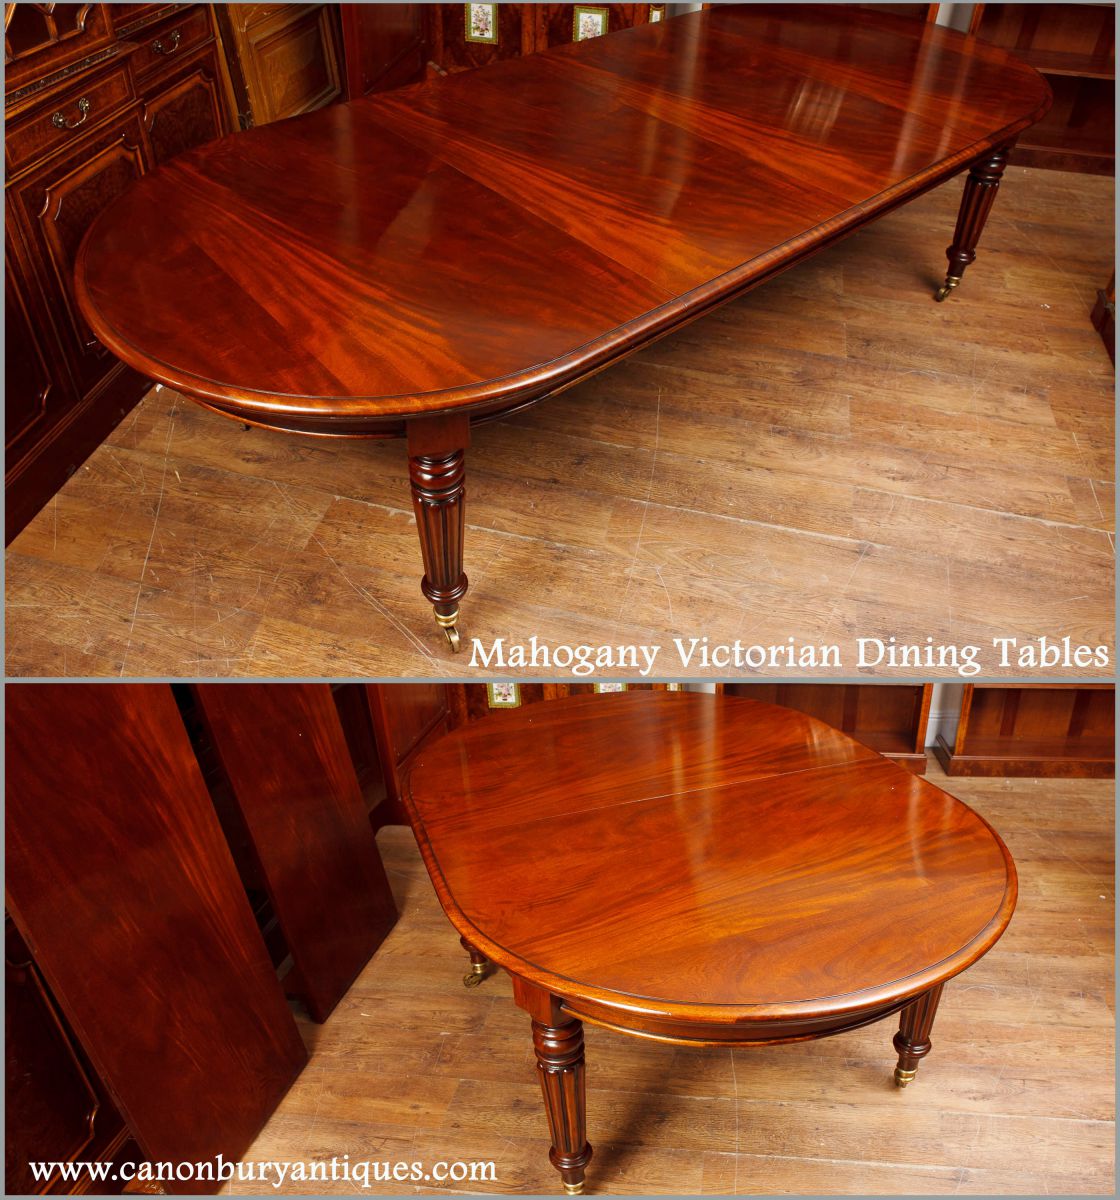 Mahogany Victorian Dining Tables